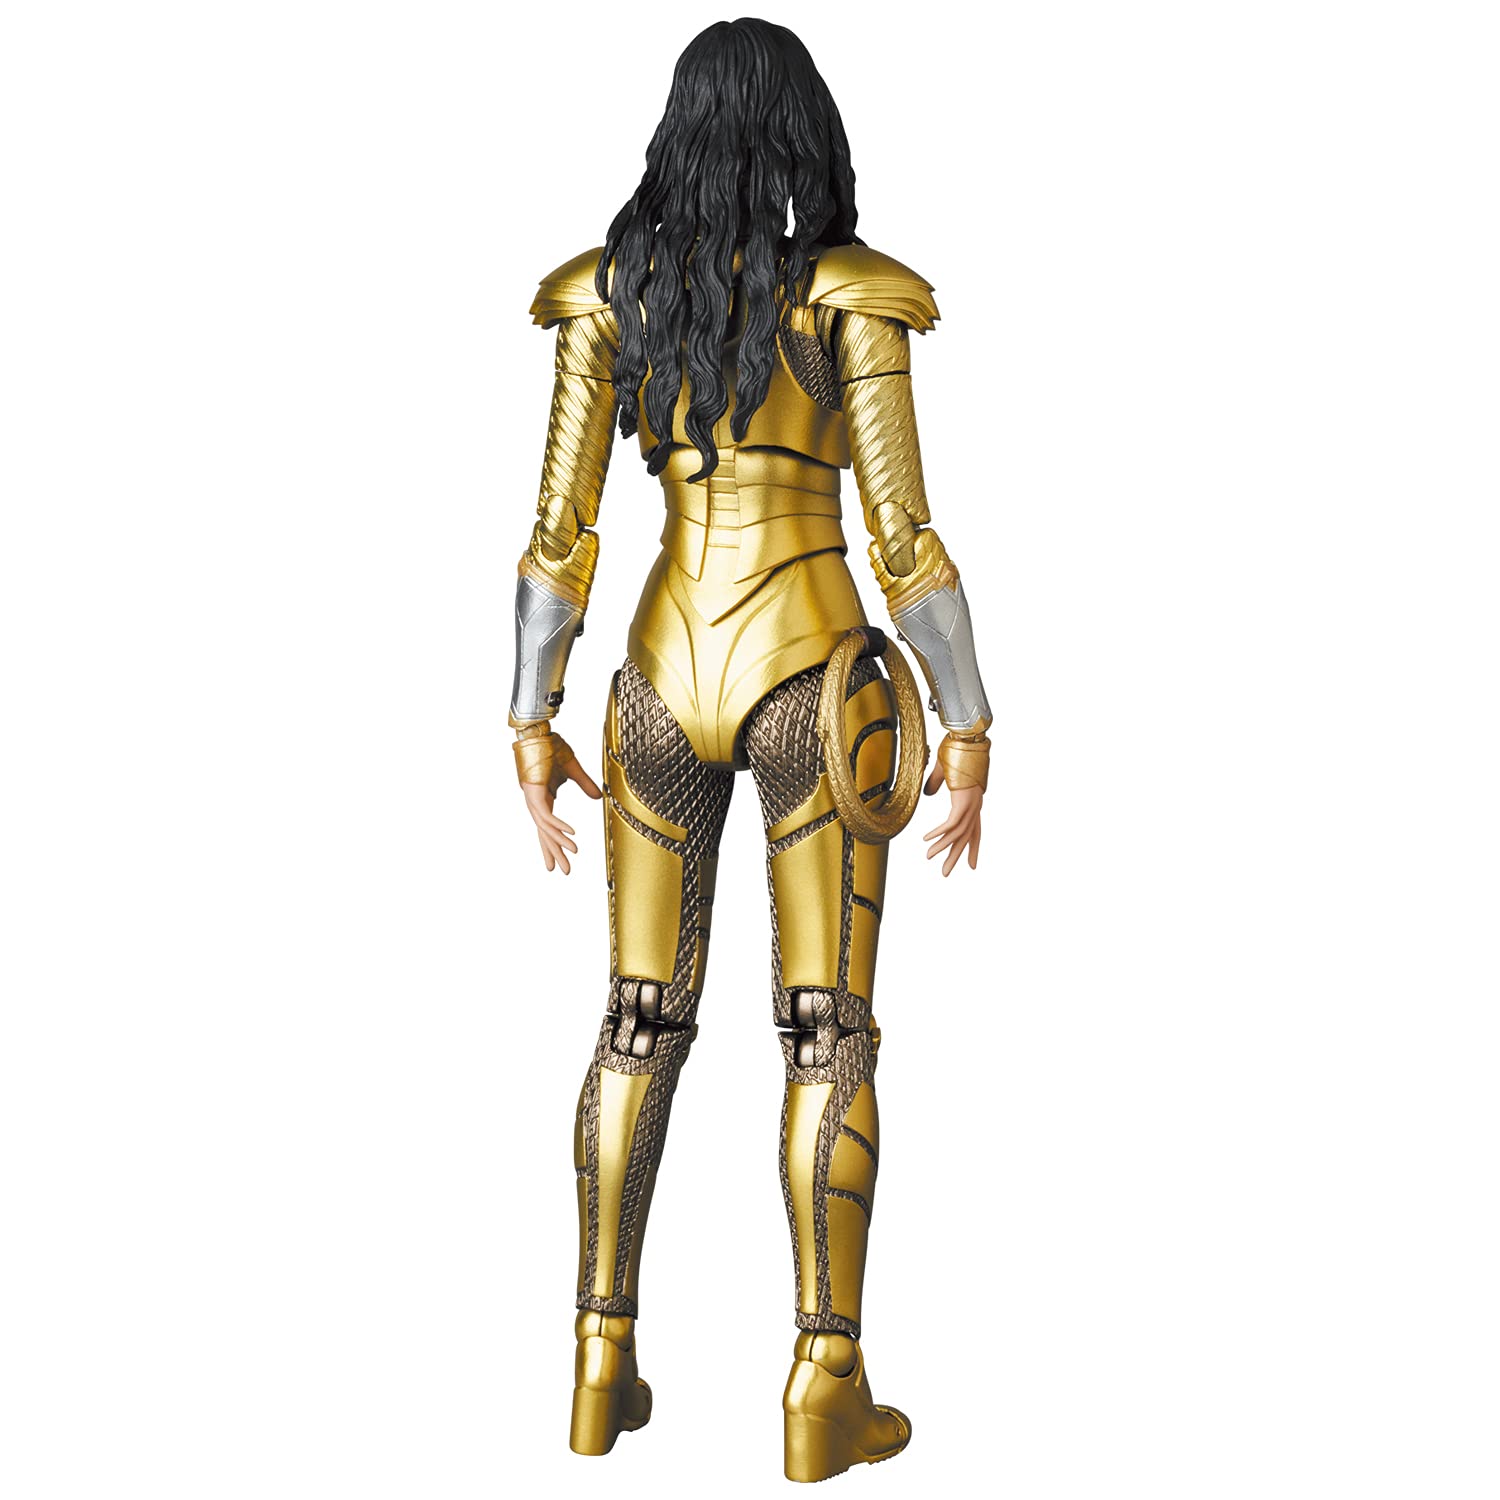 Medicom Wonder Woman 1984: Wonder Woman (Golden Armor Version) Mafex Action Figure, Multicolor